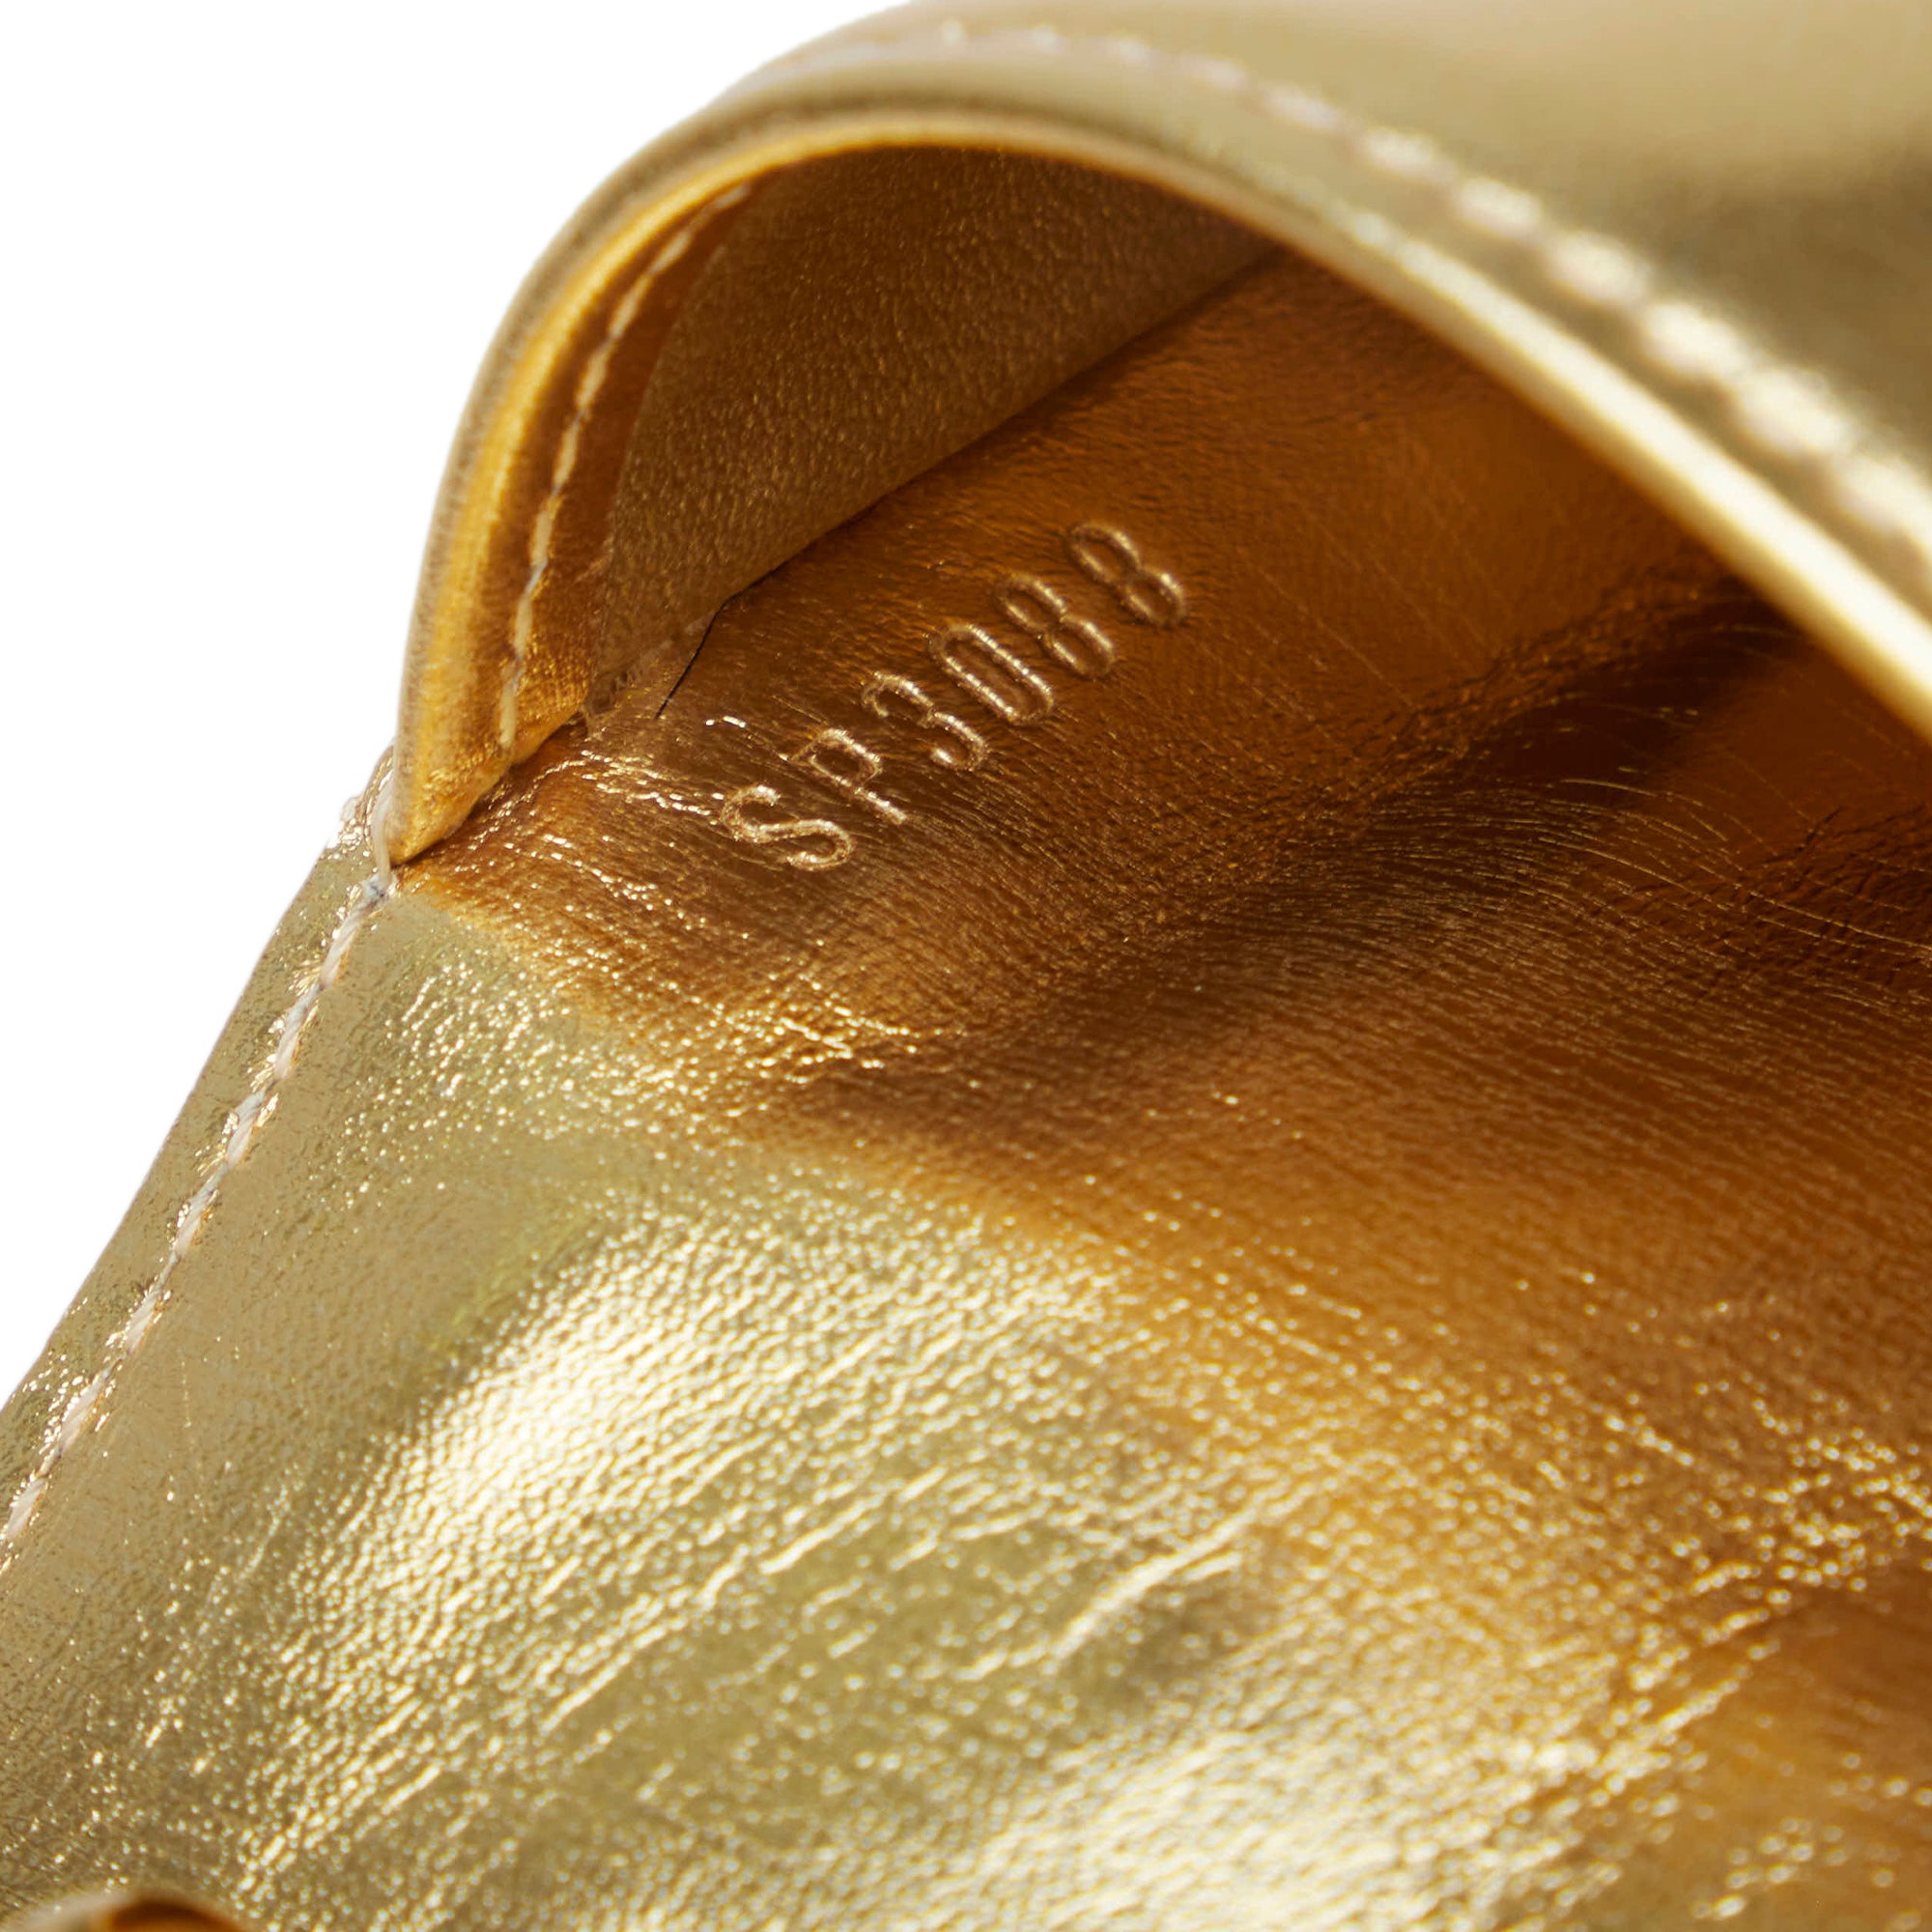 Louis Vuitton Miroir Small Monogram Embossed Ring Agenda Gold